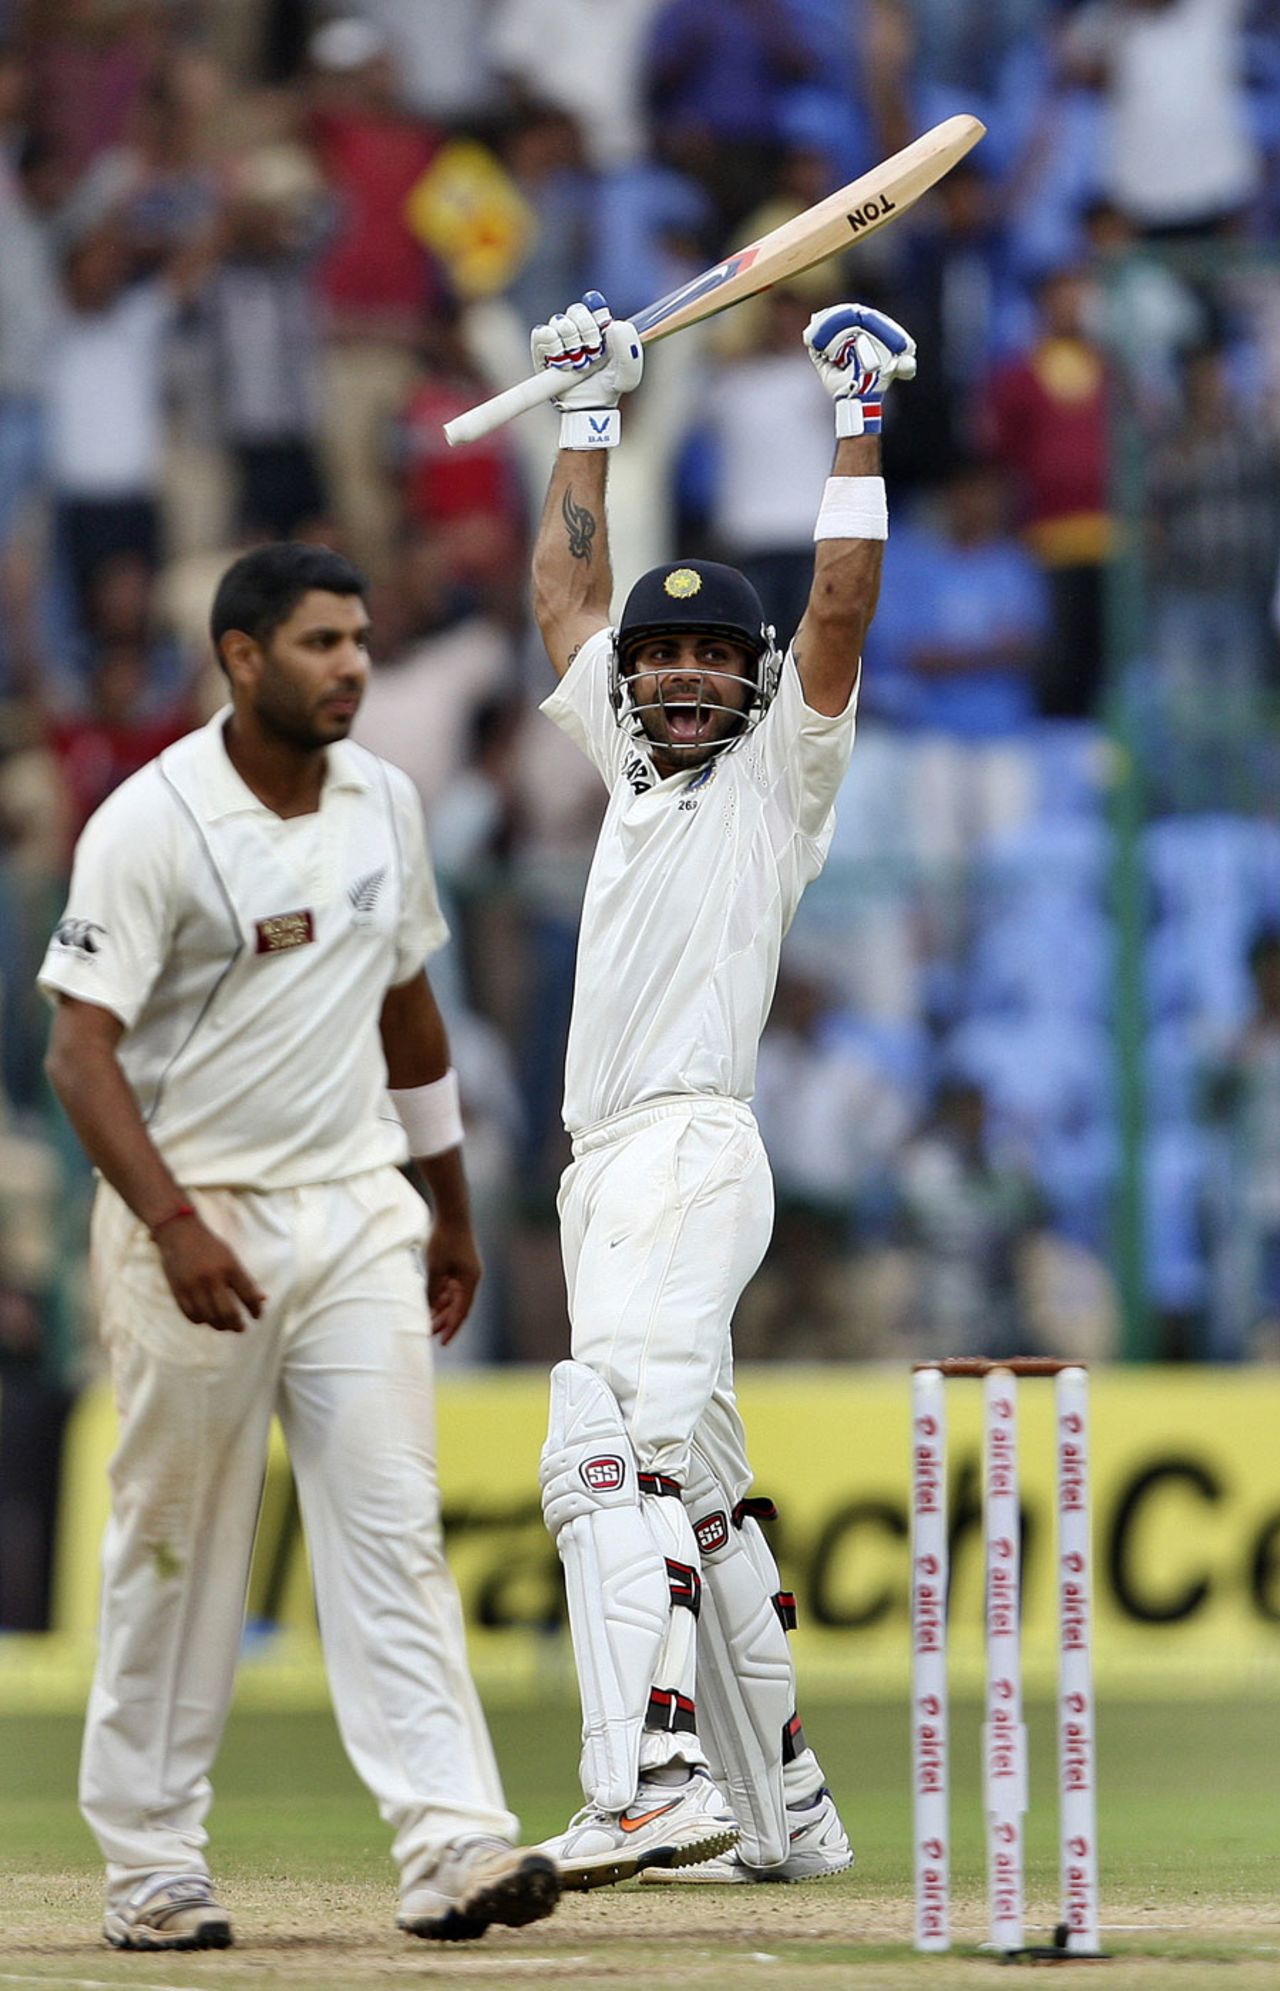 Virat Kohli roars after the winning runs are hit, India v New Zealand, 2nd Test, Bangalore, 4th day, September 3, 2012